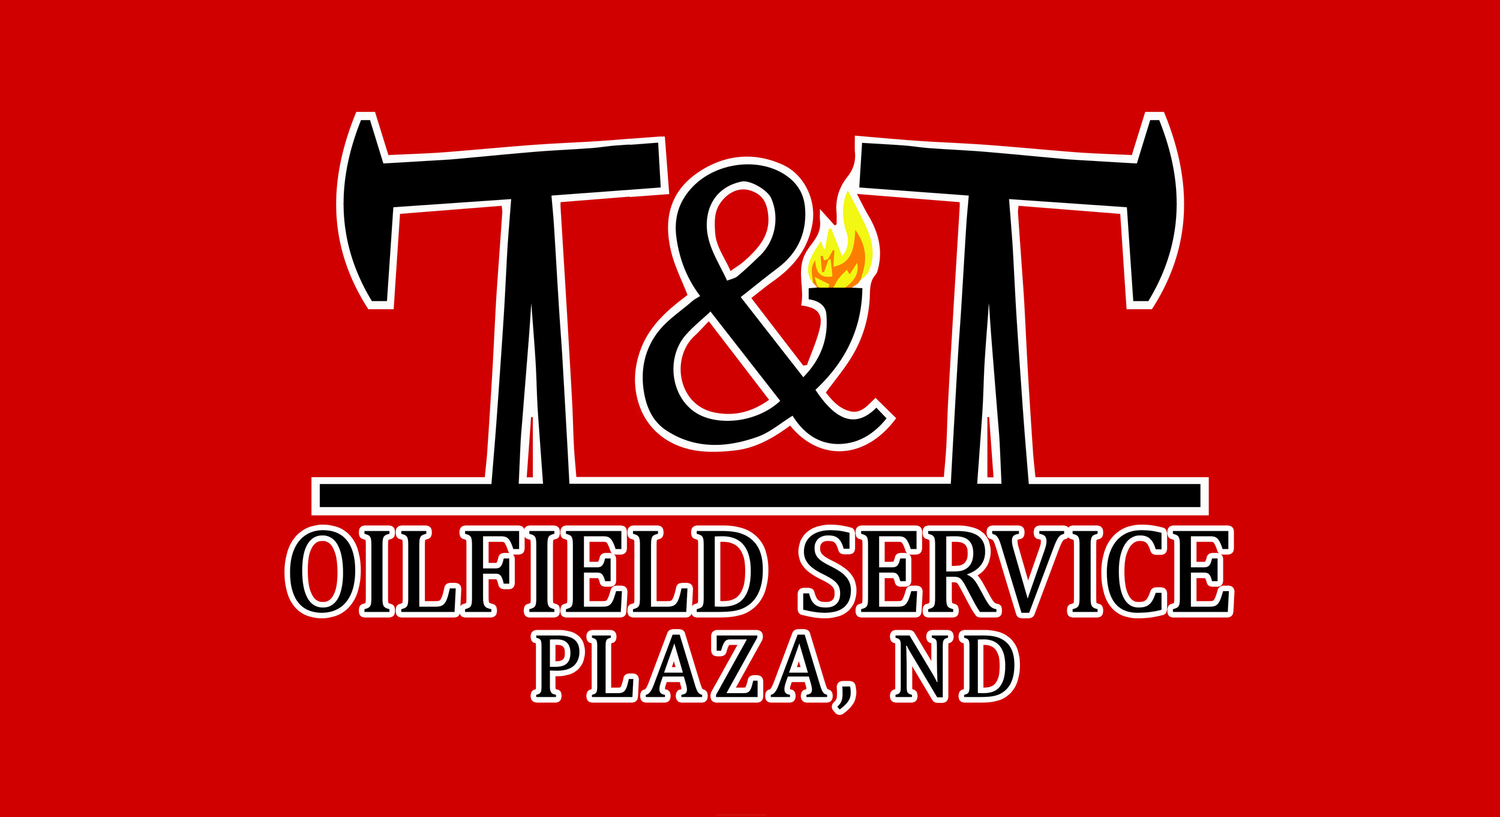 T&amp;T Oilfield Service